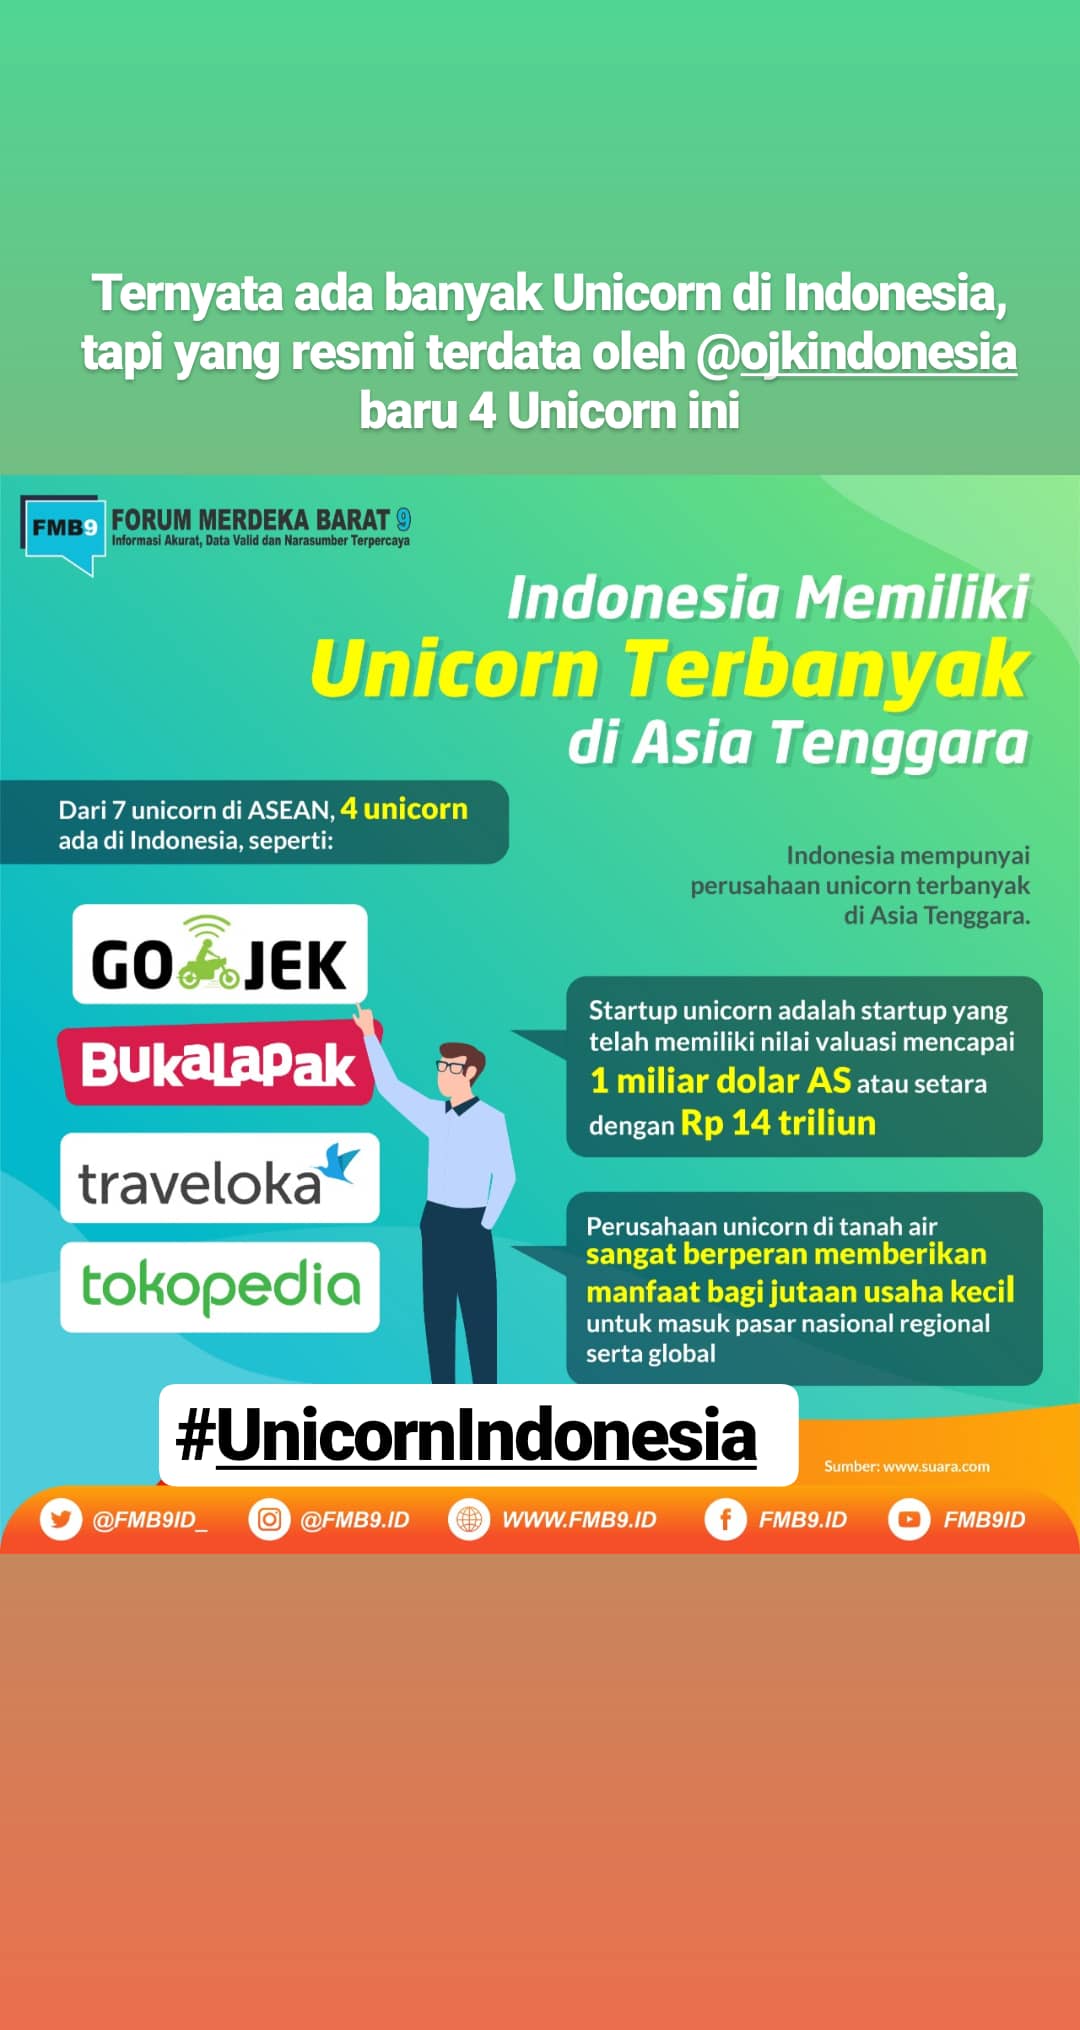 4 dari 7 Unicorn di Asia Tenggara ada di Indonesia.